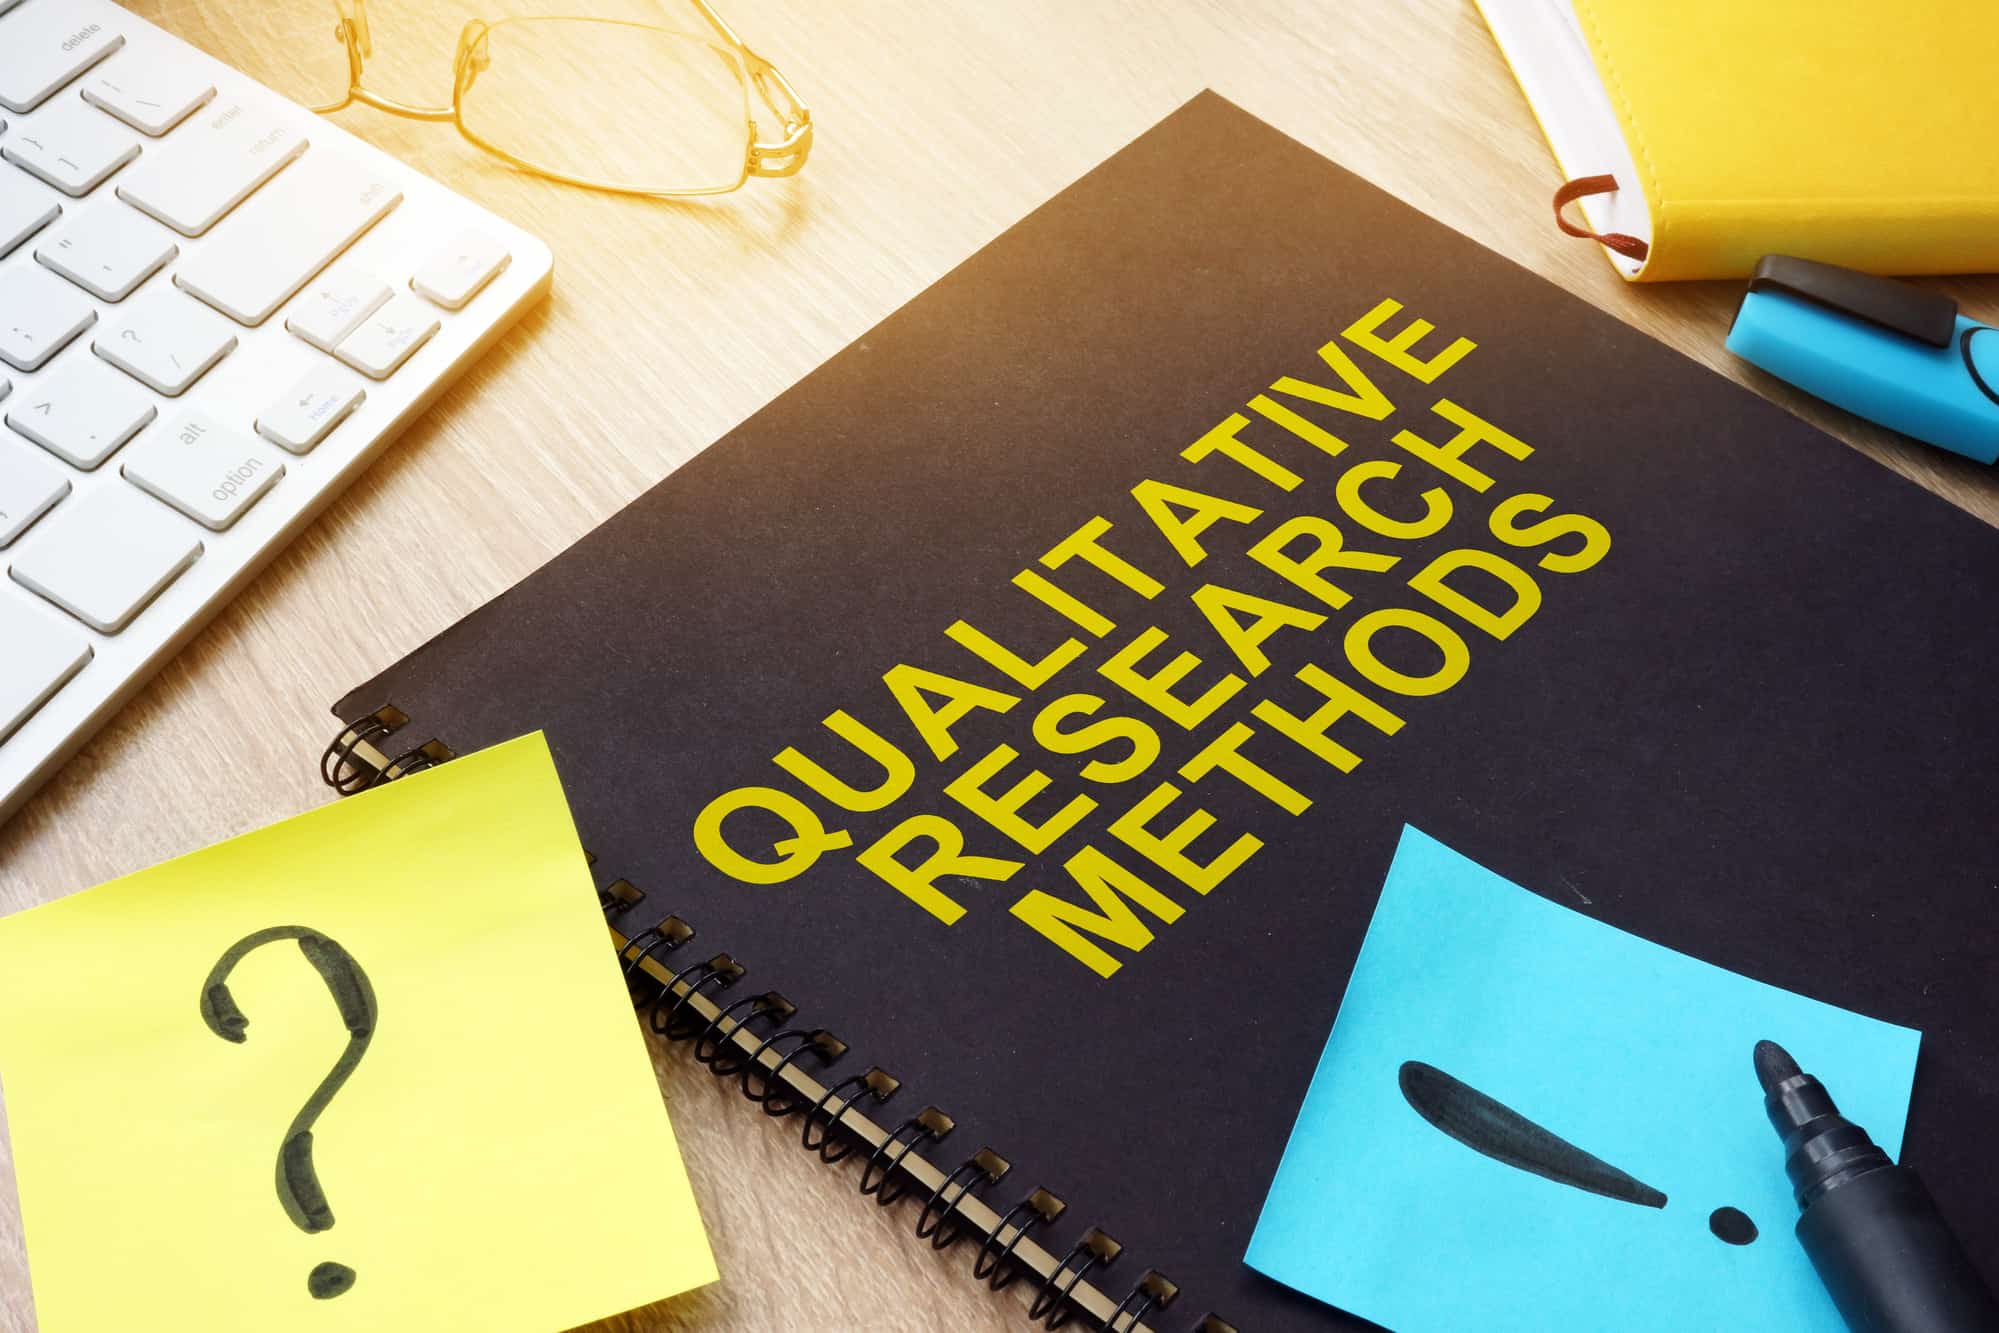 qualitative-analysis-methods